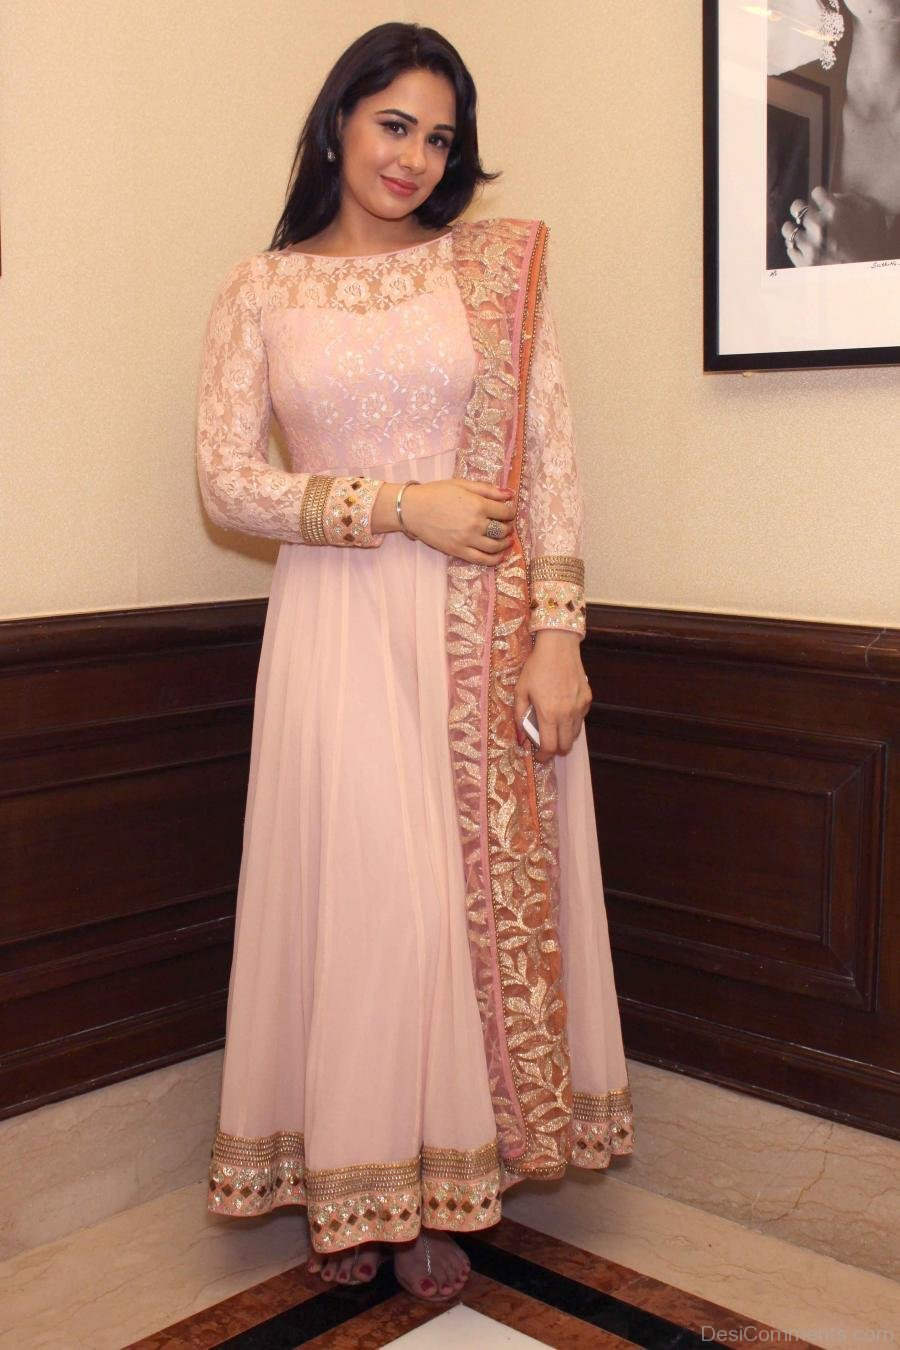 Mandy Takhar In Pink Dress